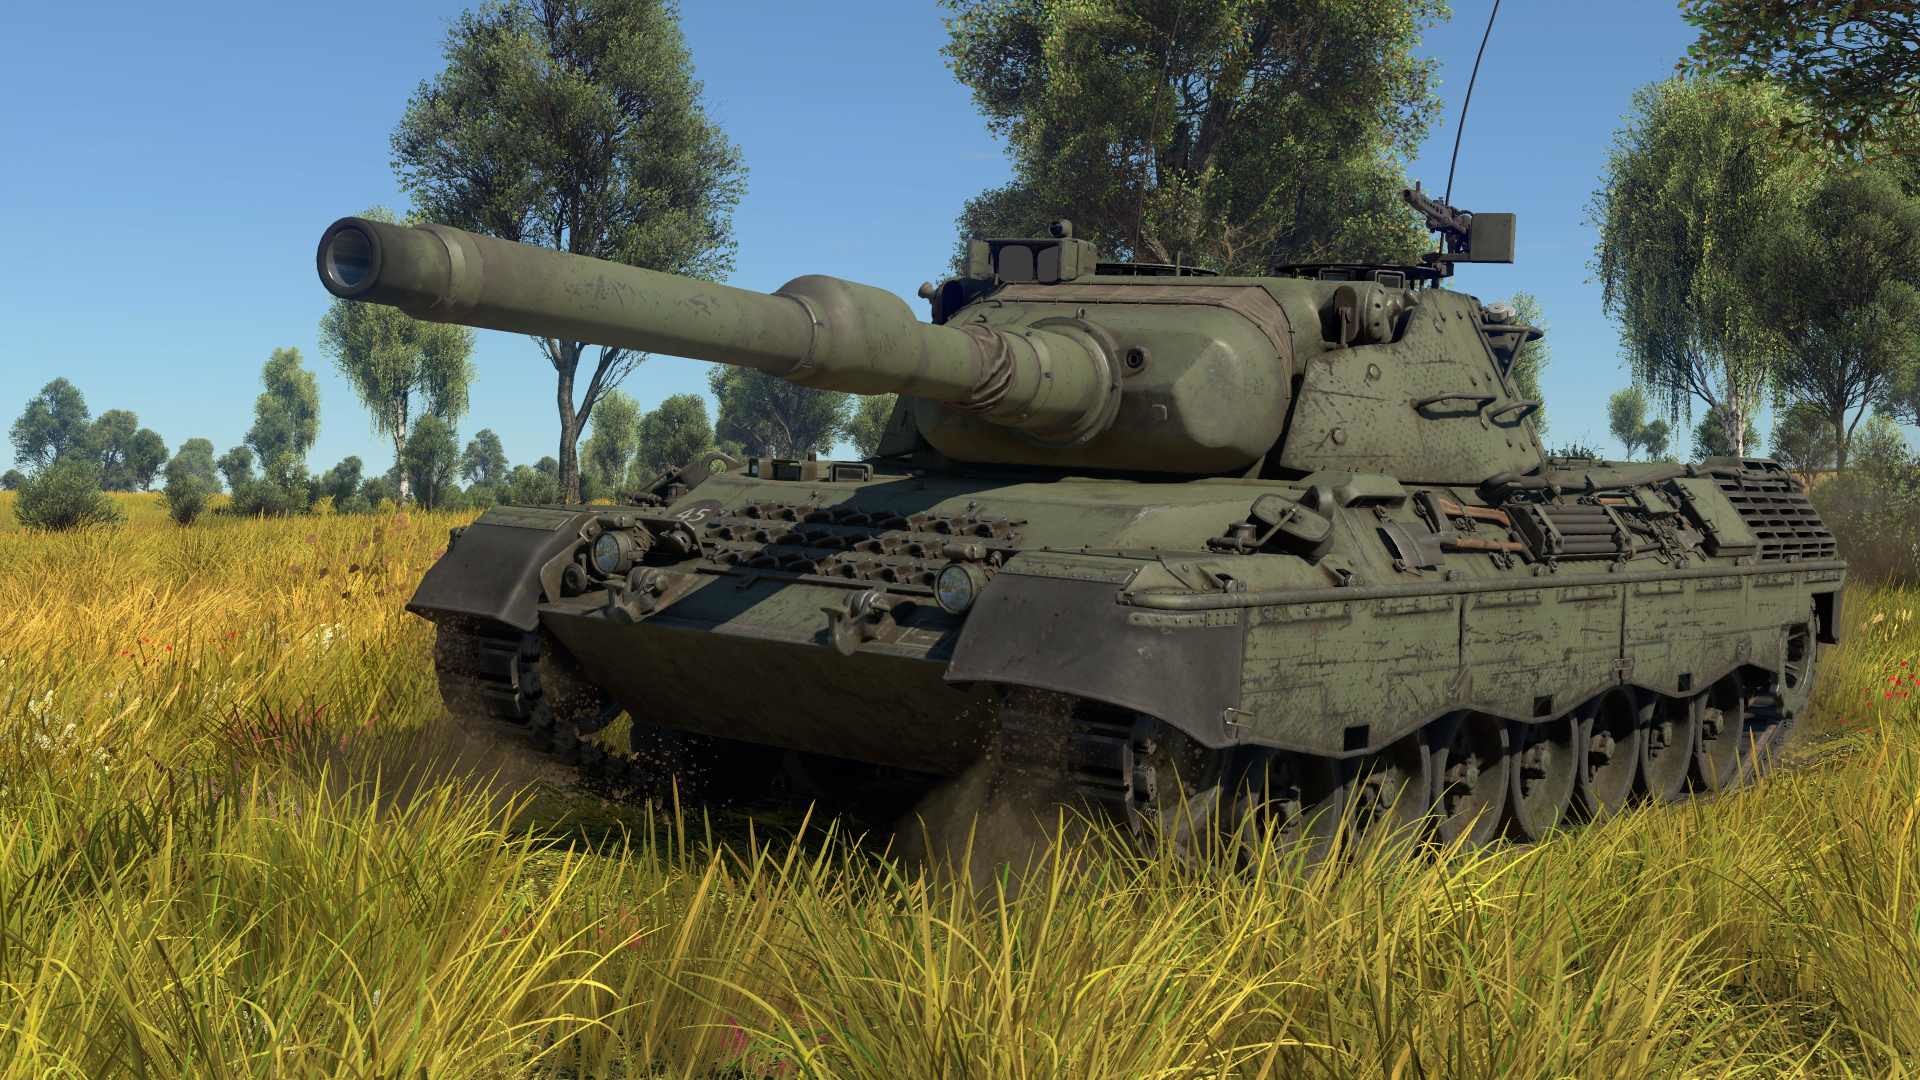 War Thunder Leopard Pack On Steam